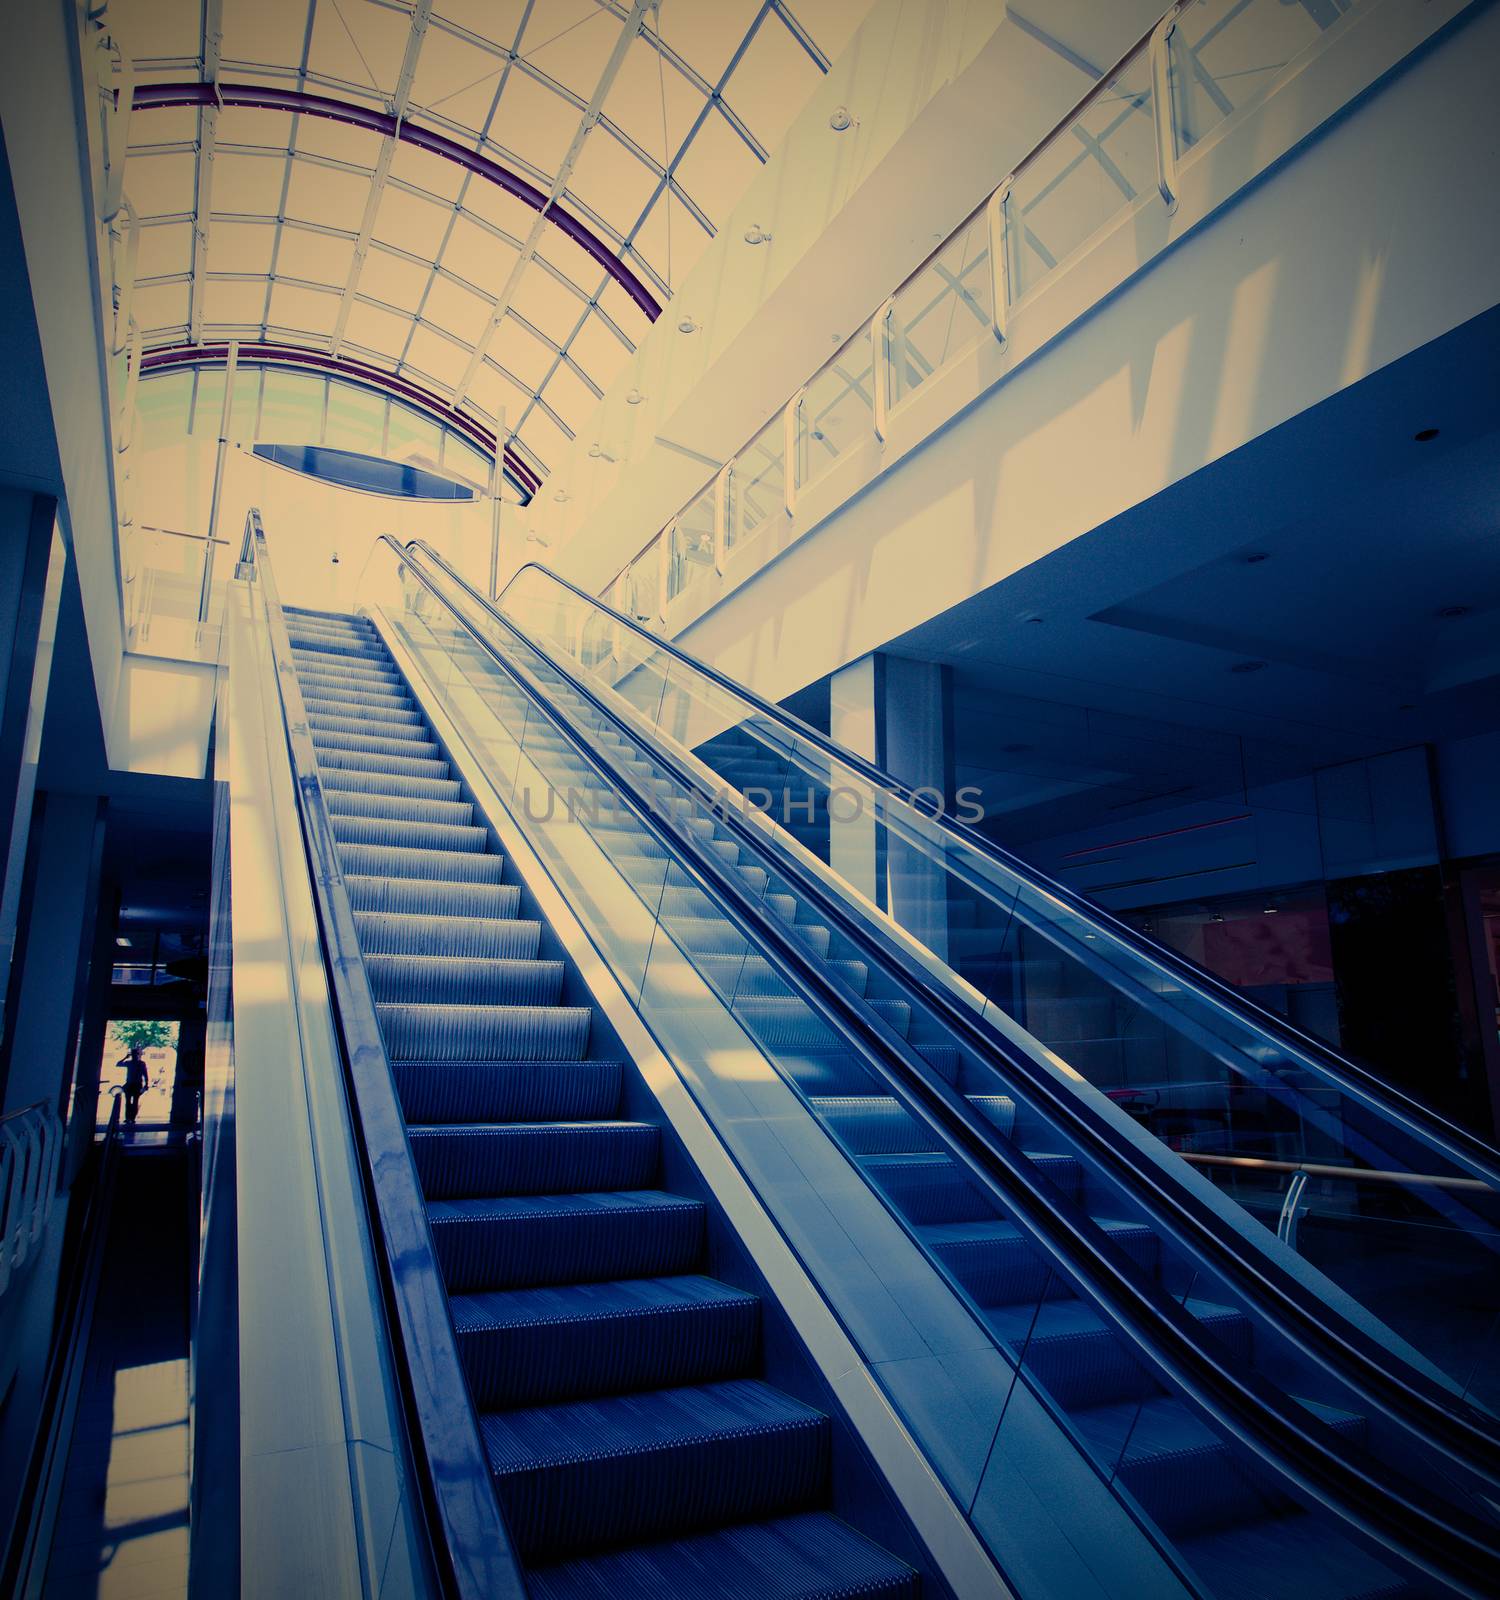 Escalator in modern building, instagram image style